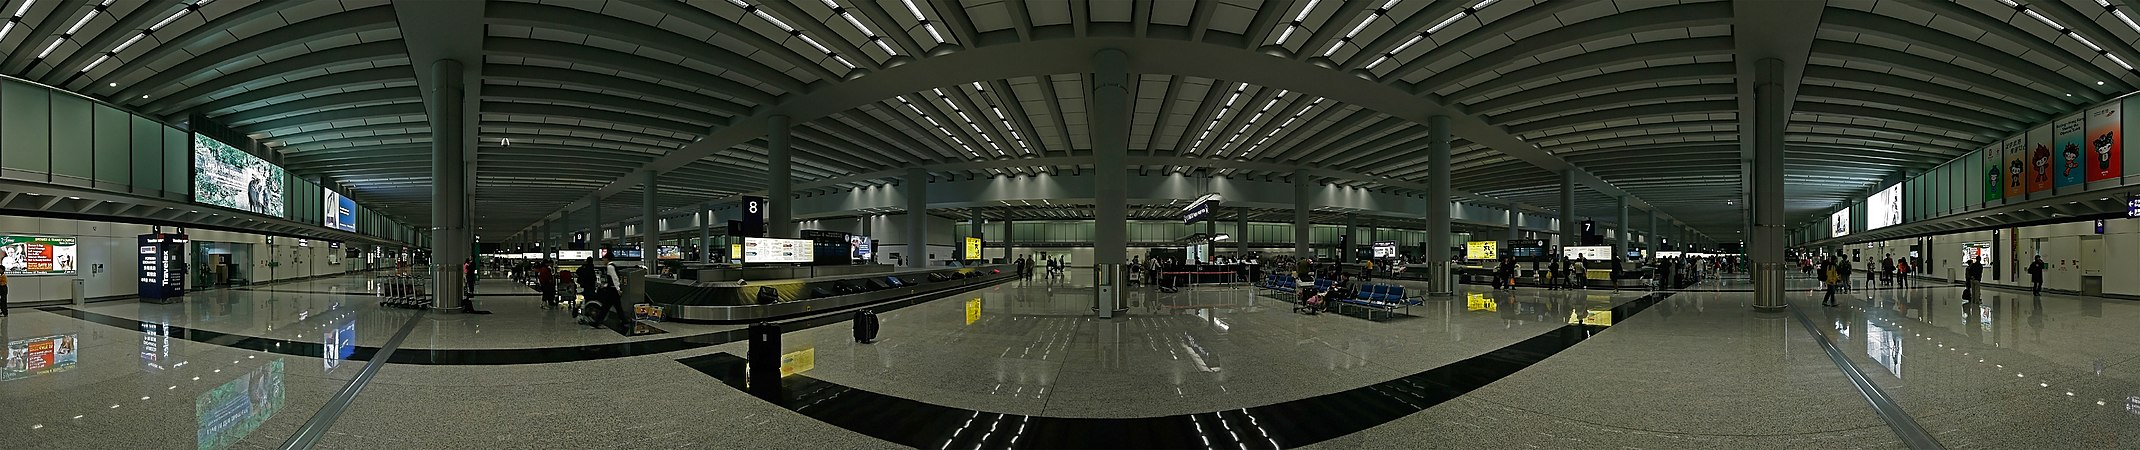 Baggage reclaim area at Hong Kong International Airport, by Samuel Louie